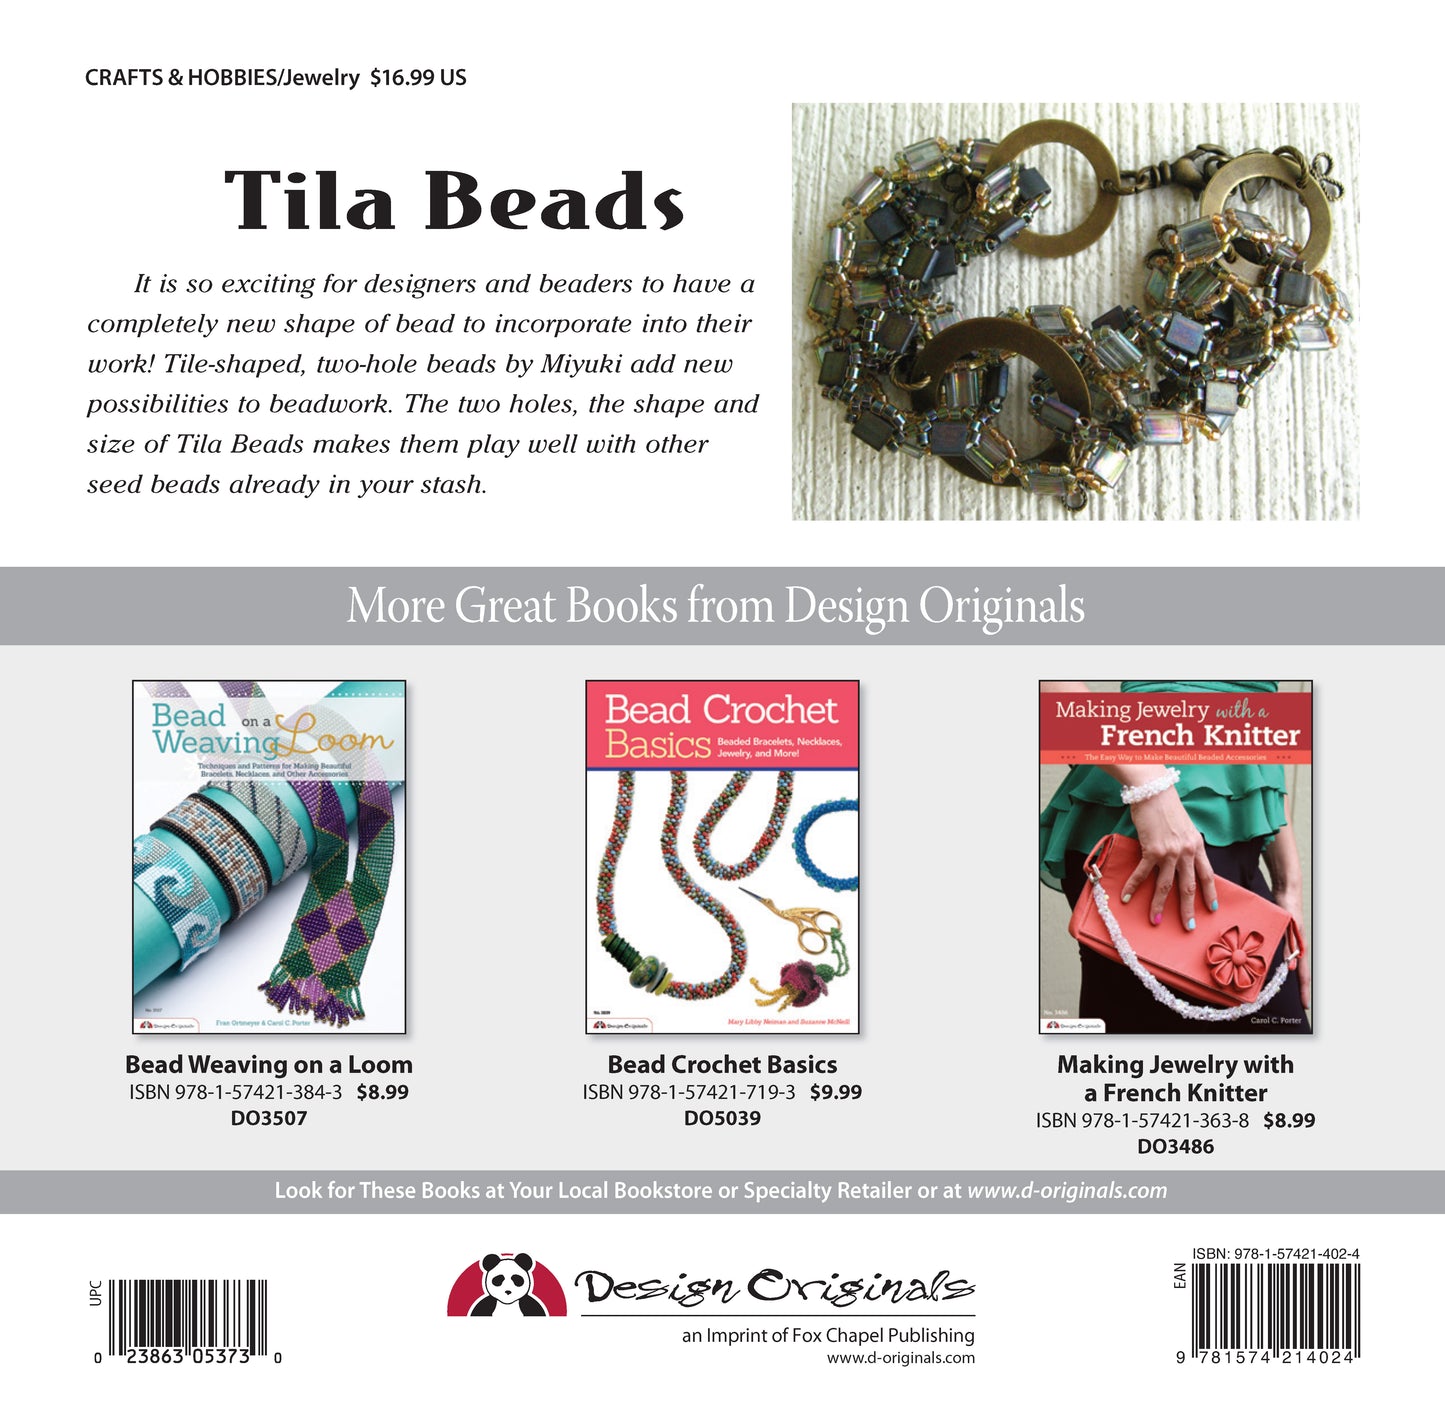 Tila Beads